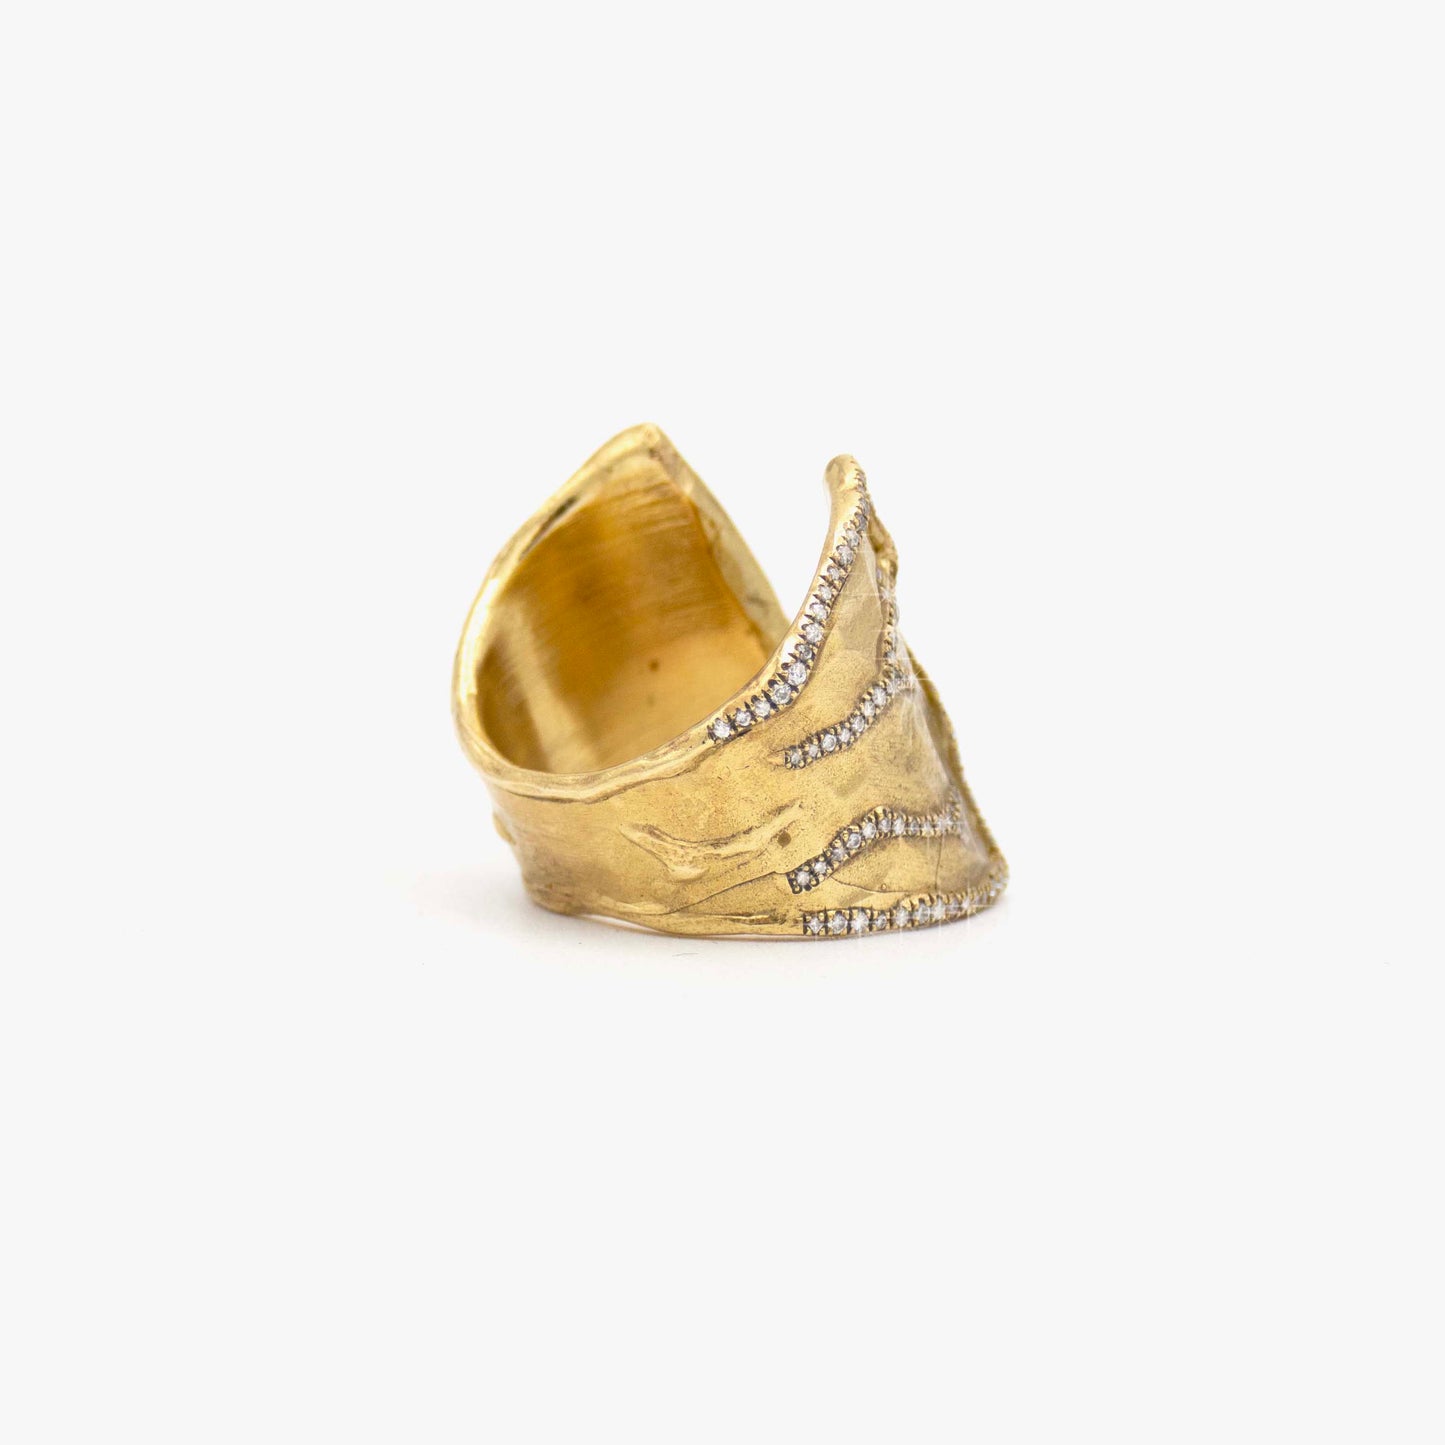 10K Gold Open Cuff Ring